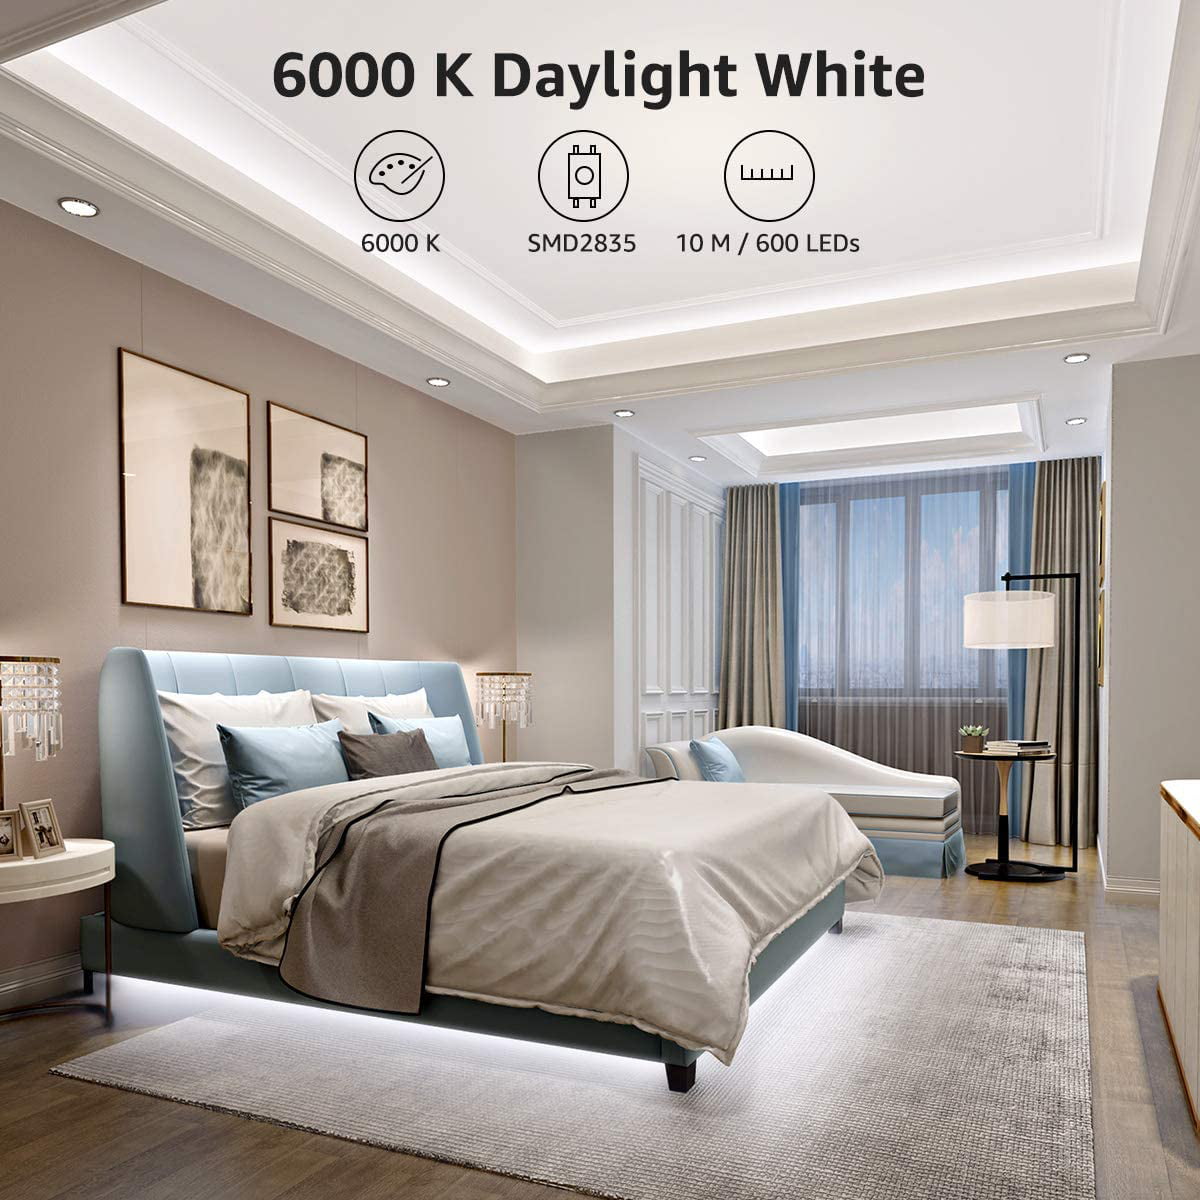 Bedroom Daylight White 600 LEDs SMD 2835 Suitable for Home Strong 3M Adhesive Lighting EVER 32.8ft LED Strip Light Under Cabinet 6000K LED Tape Lights Kitchen 